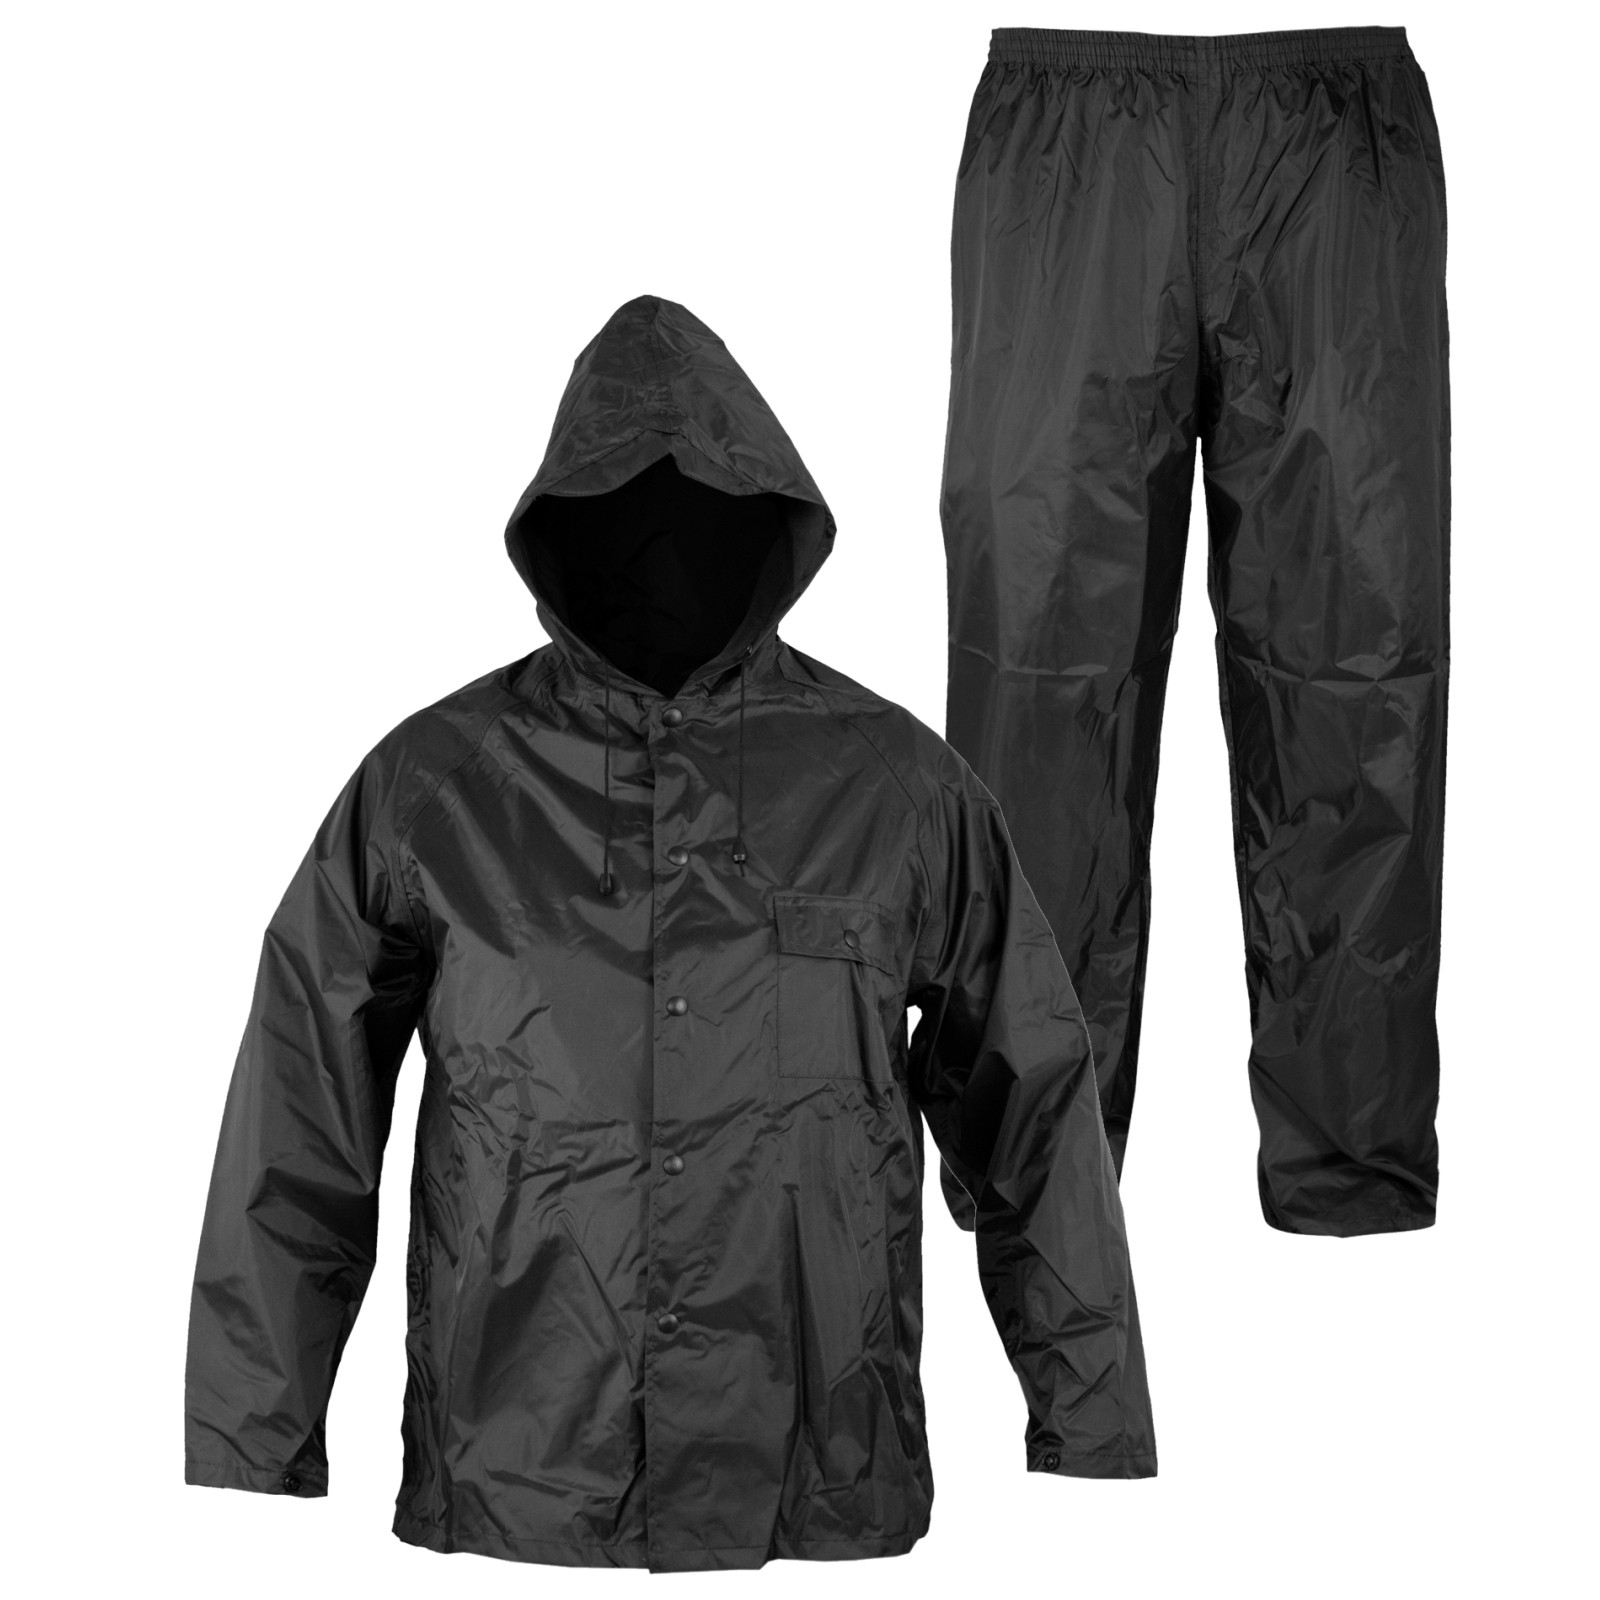 Kids Waterproof Jacket  Pant COMBO  Keep them Dry  goRideconz